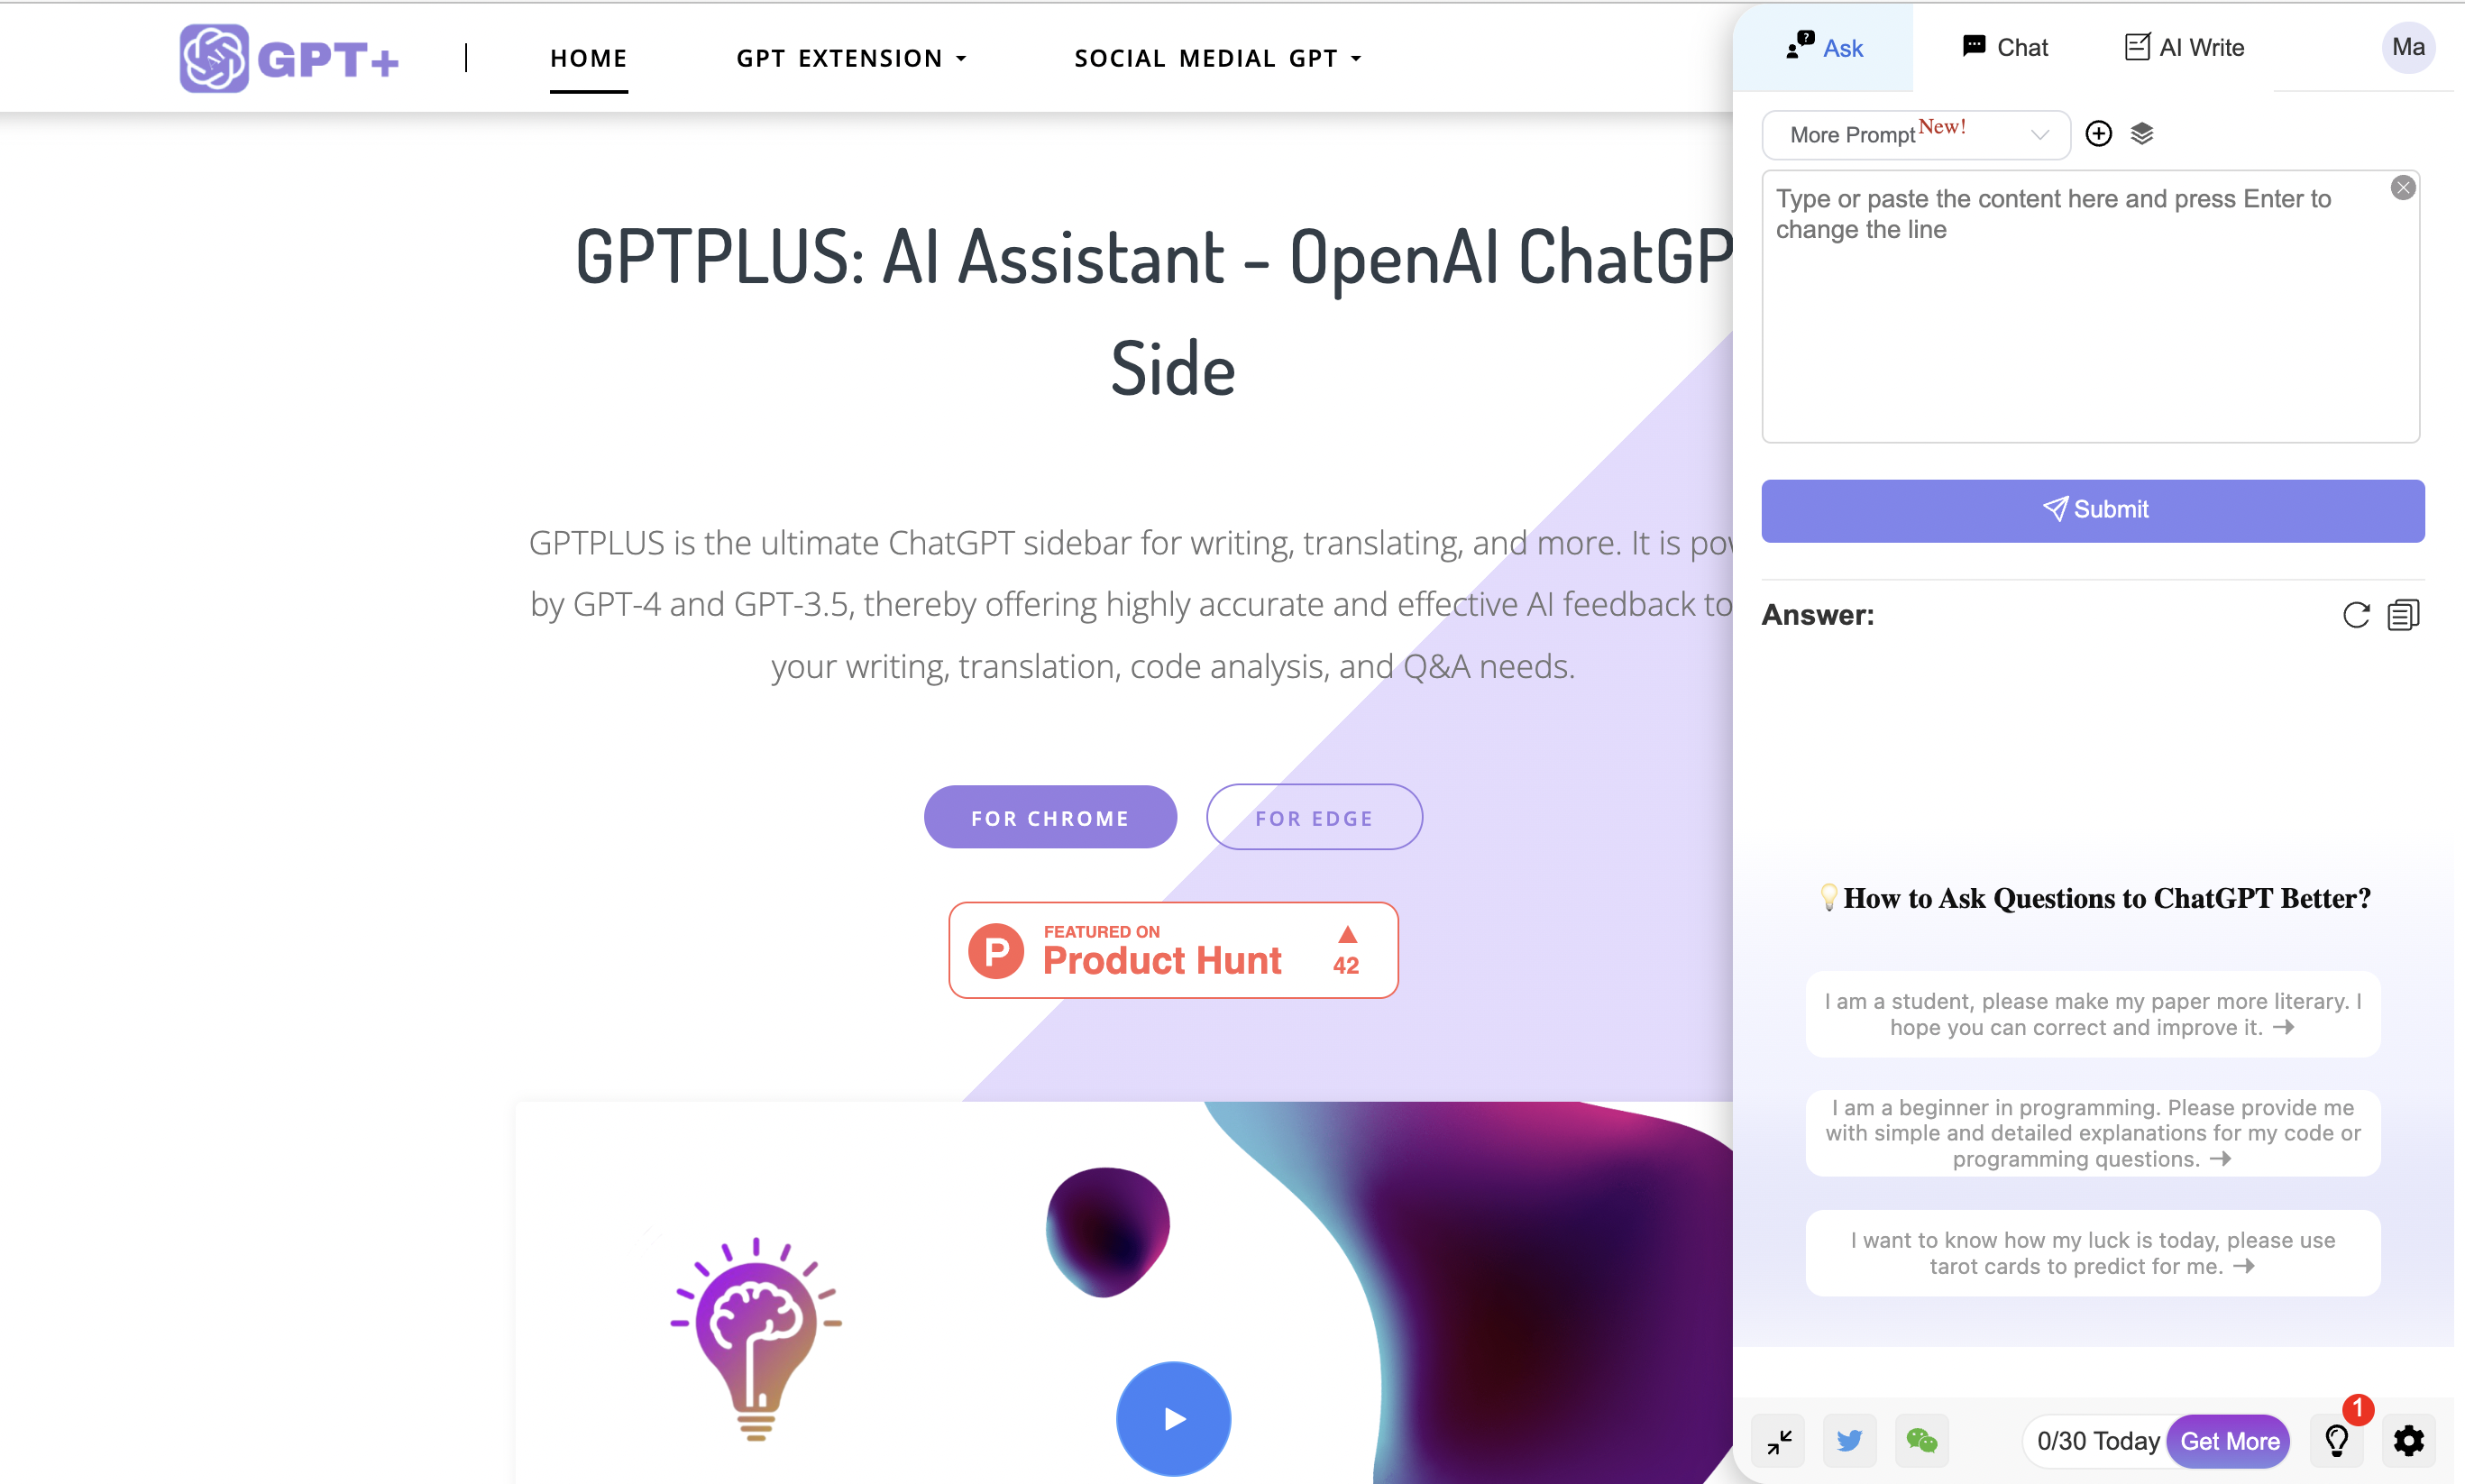 Top 1: GPTPLUS - AI Assistant